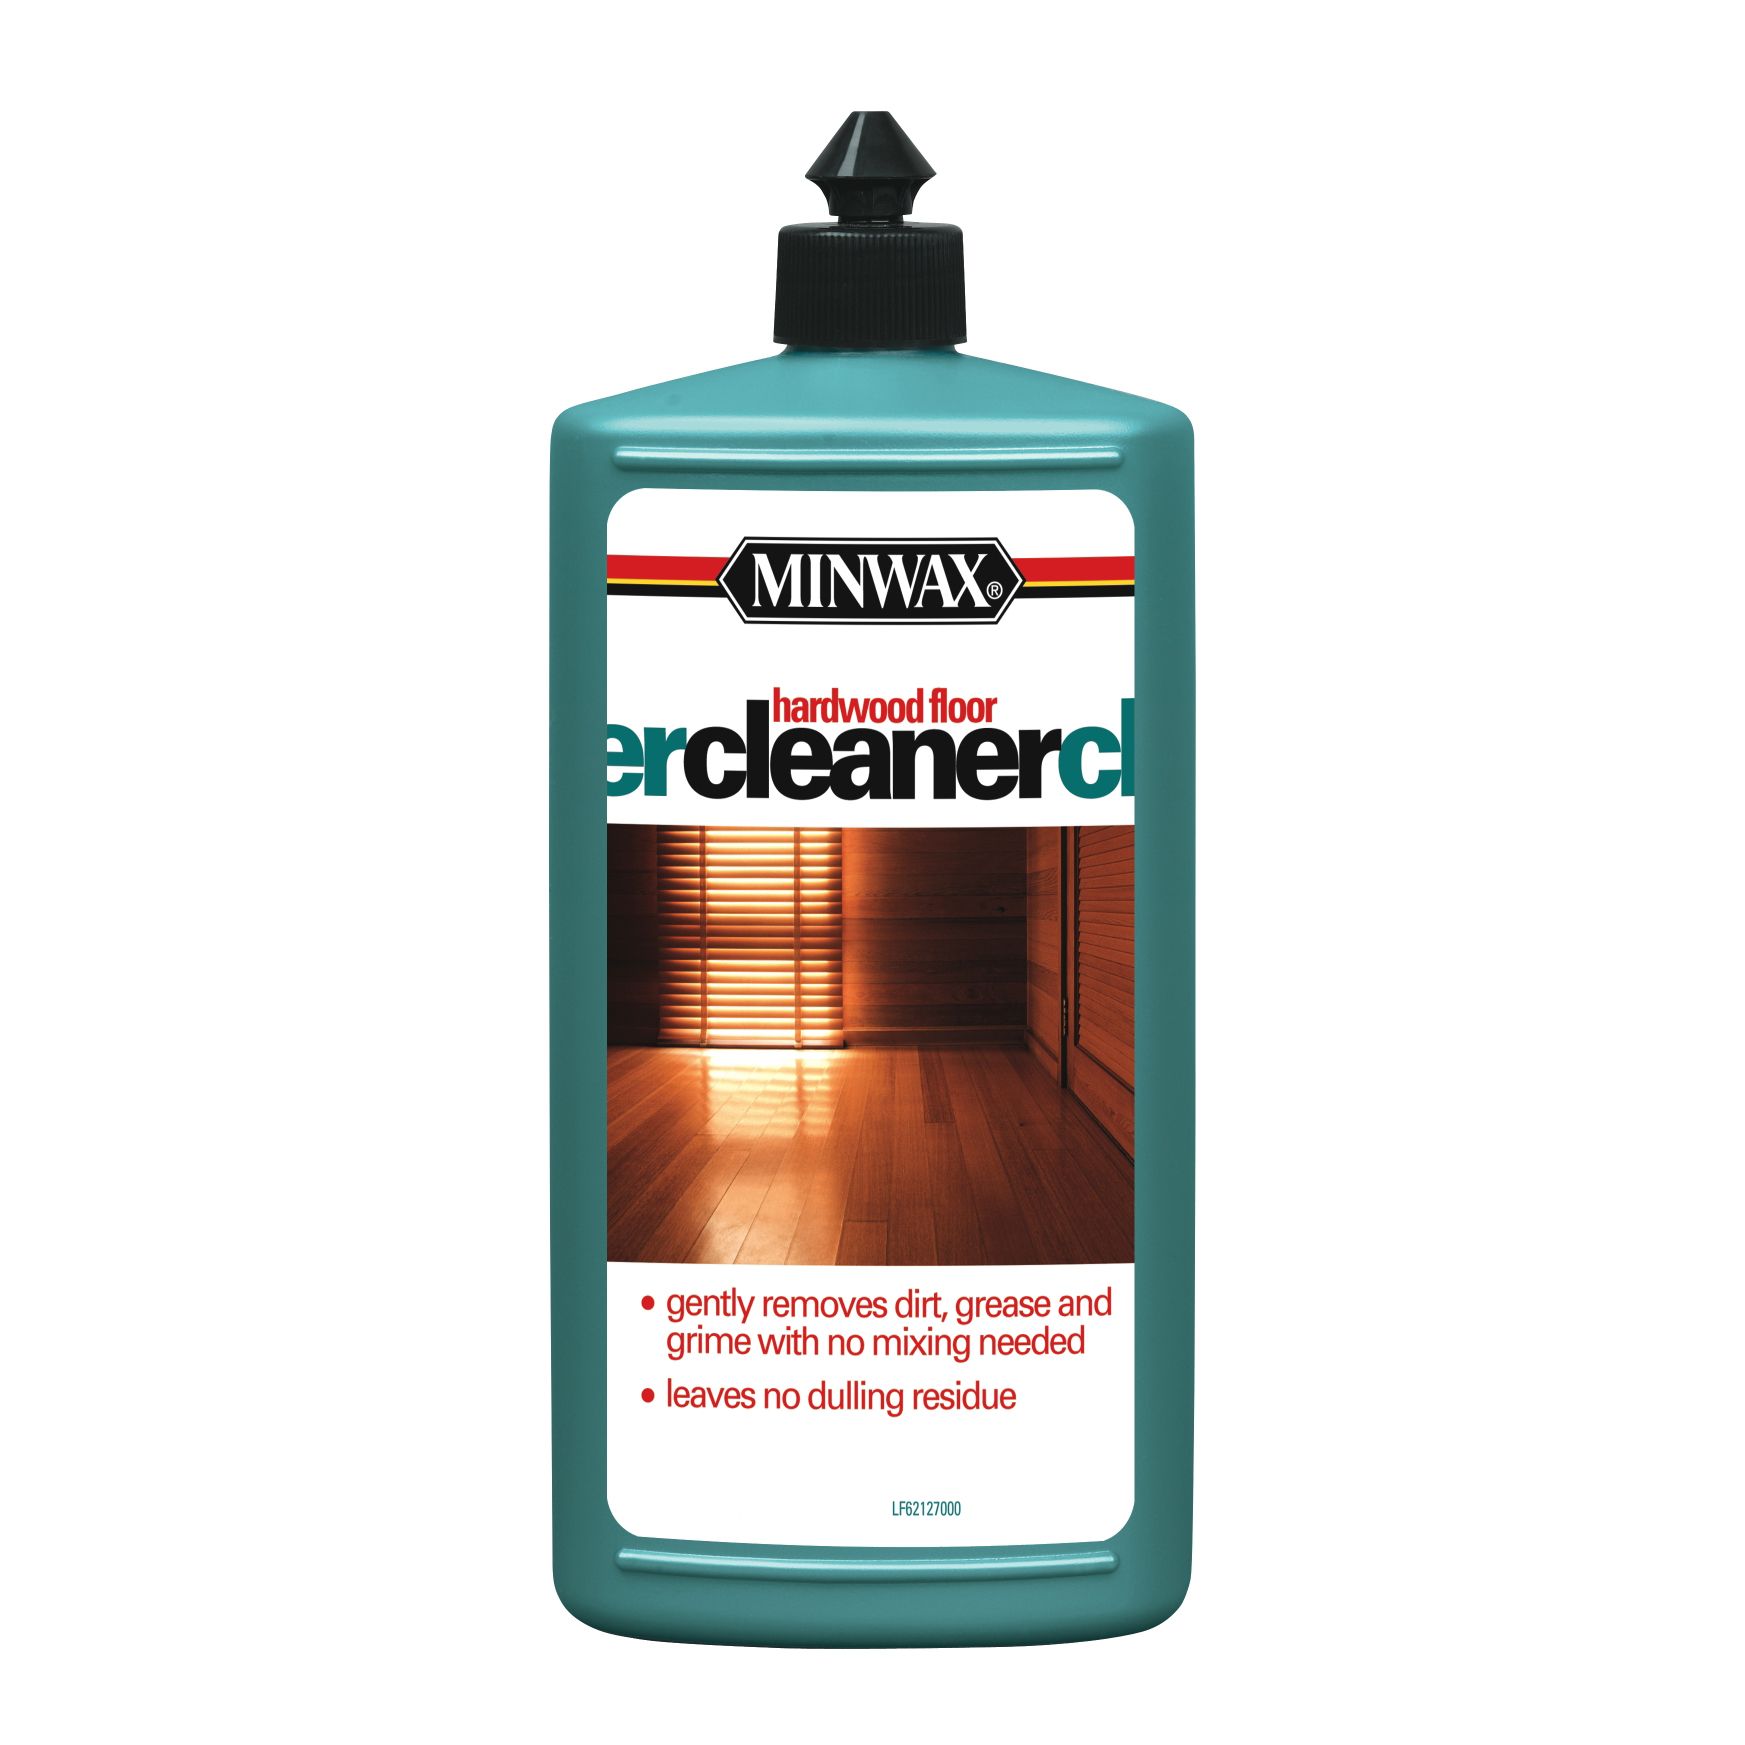 Minwax Hardwood Floor Cleaner